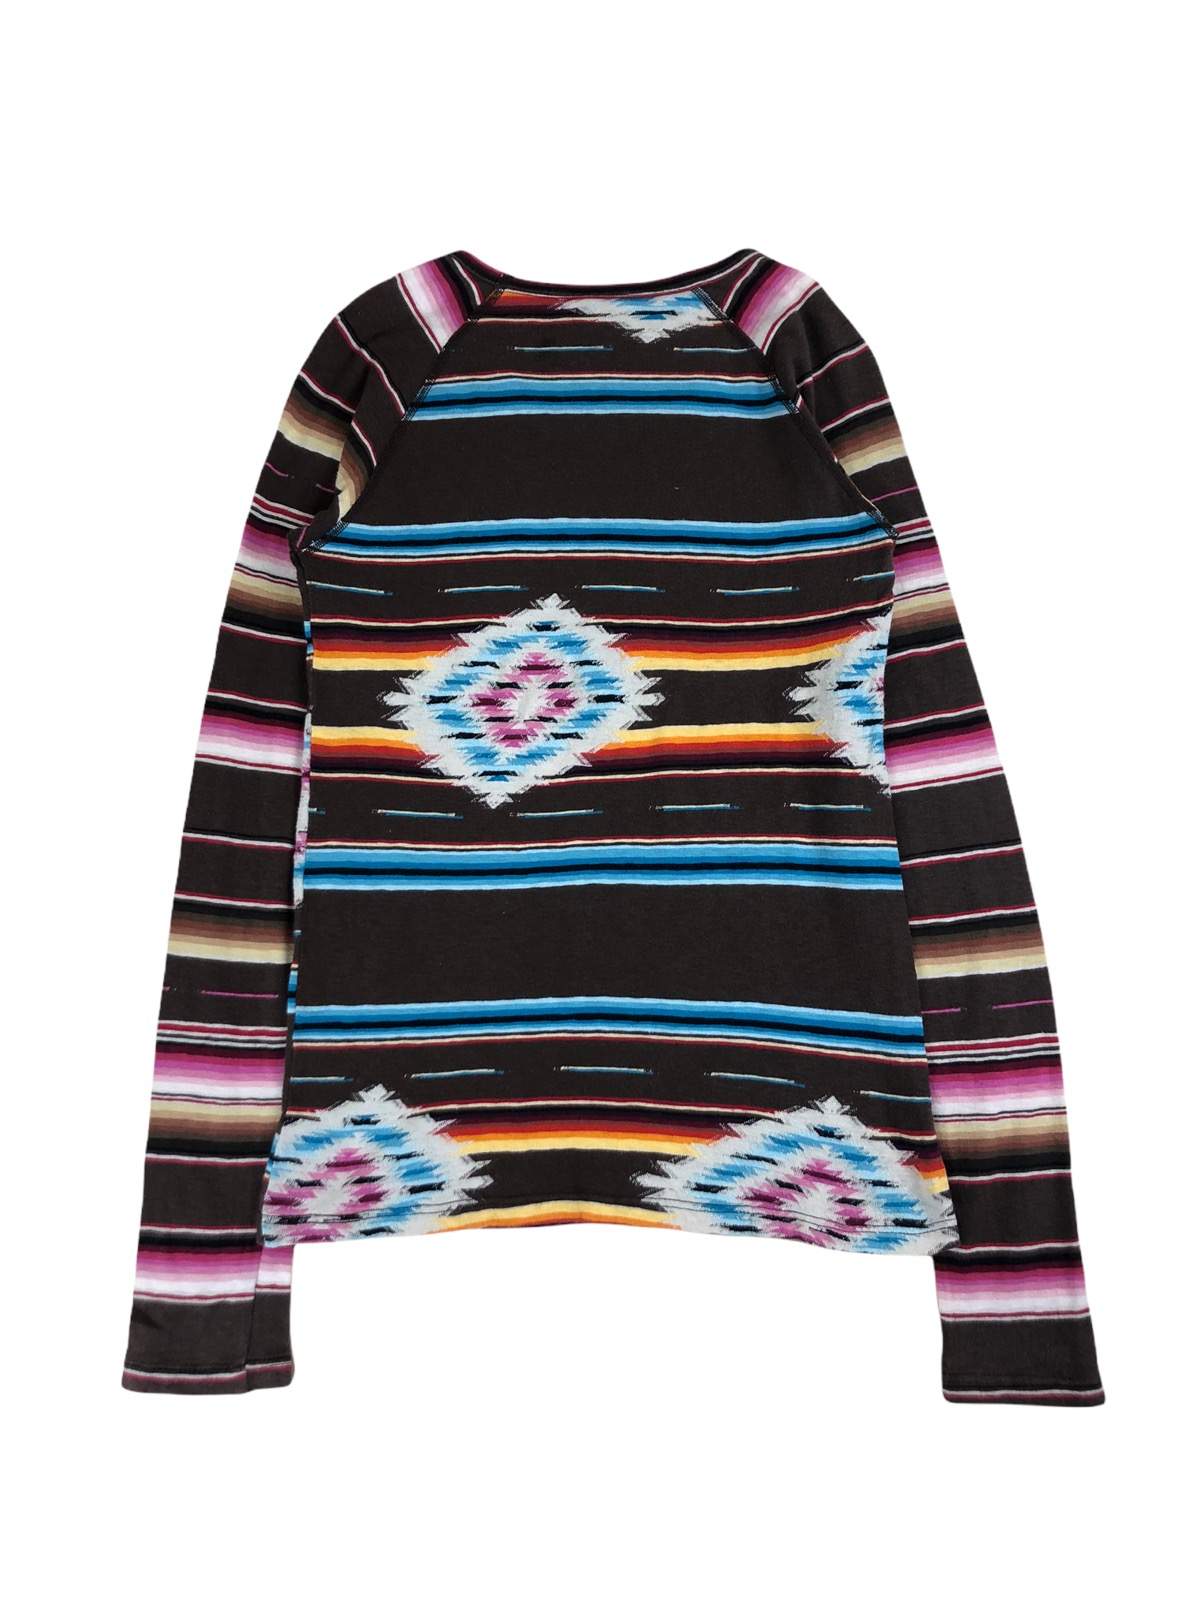 Vintage Kapital Aztec motif Cotton Knit Tshirt - 5